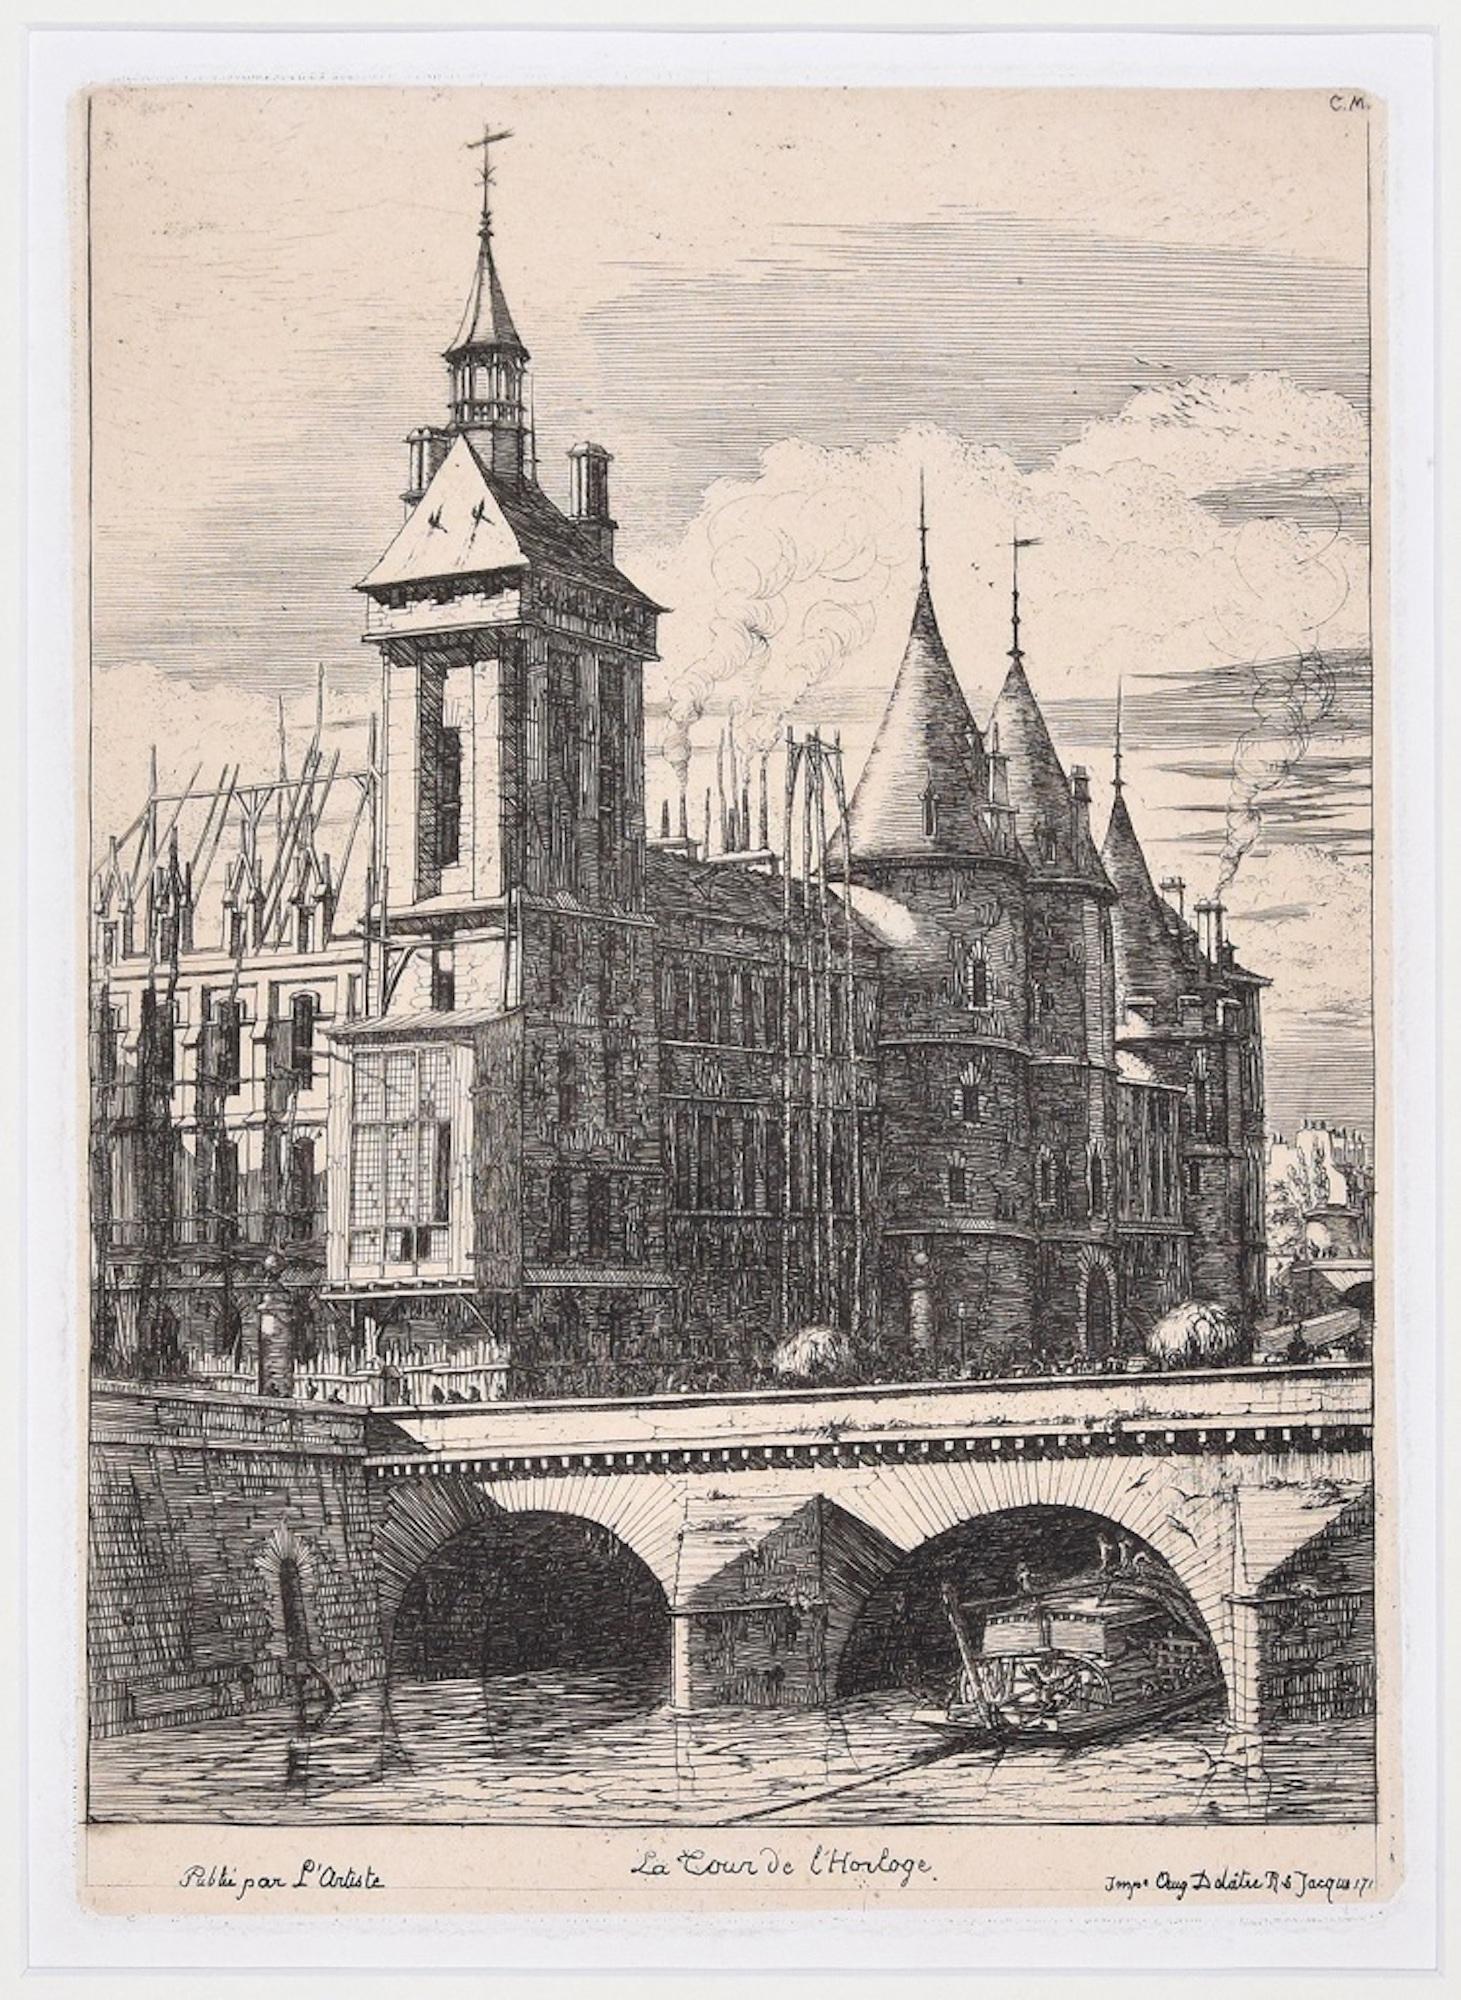 Charles Meryon Landscape Print - La Tour de l’Horloge - Original Etching by C. Meryon - 1850 ca.